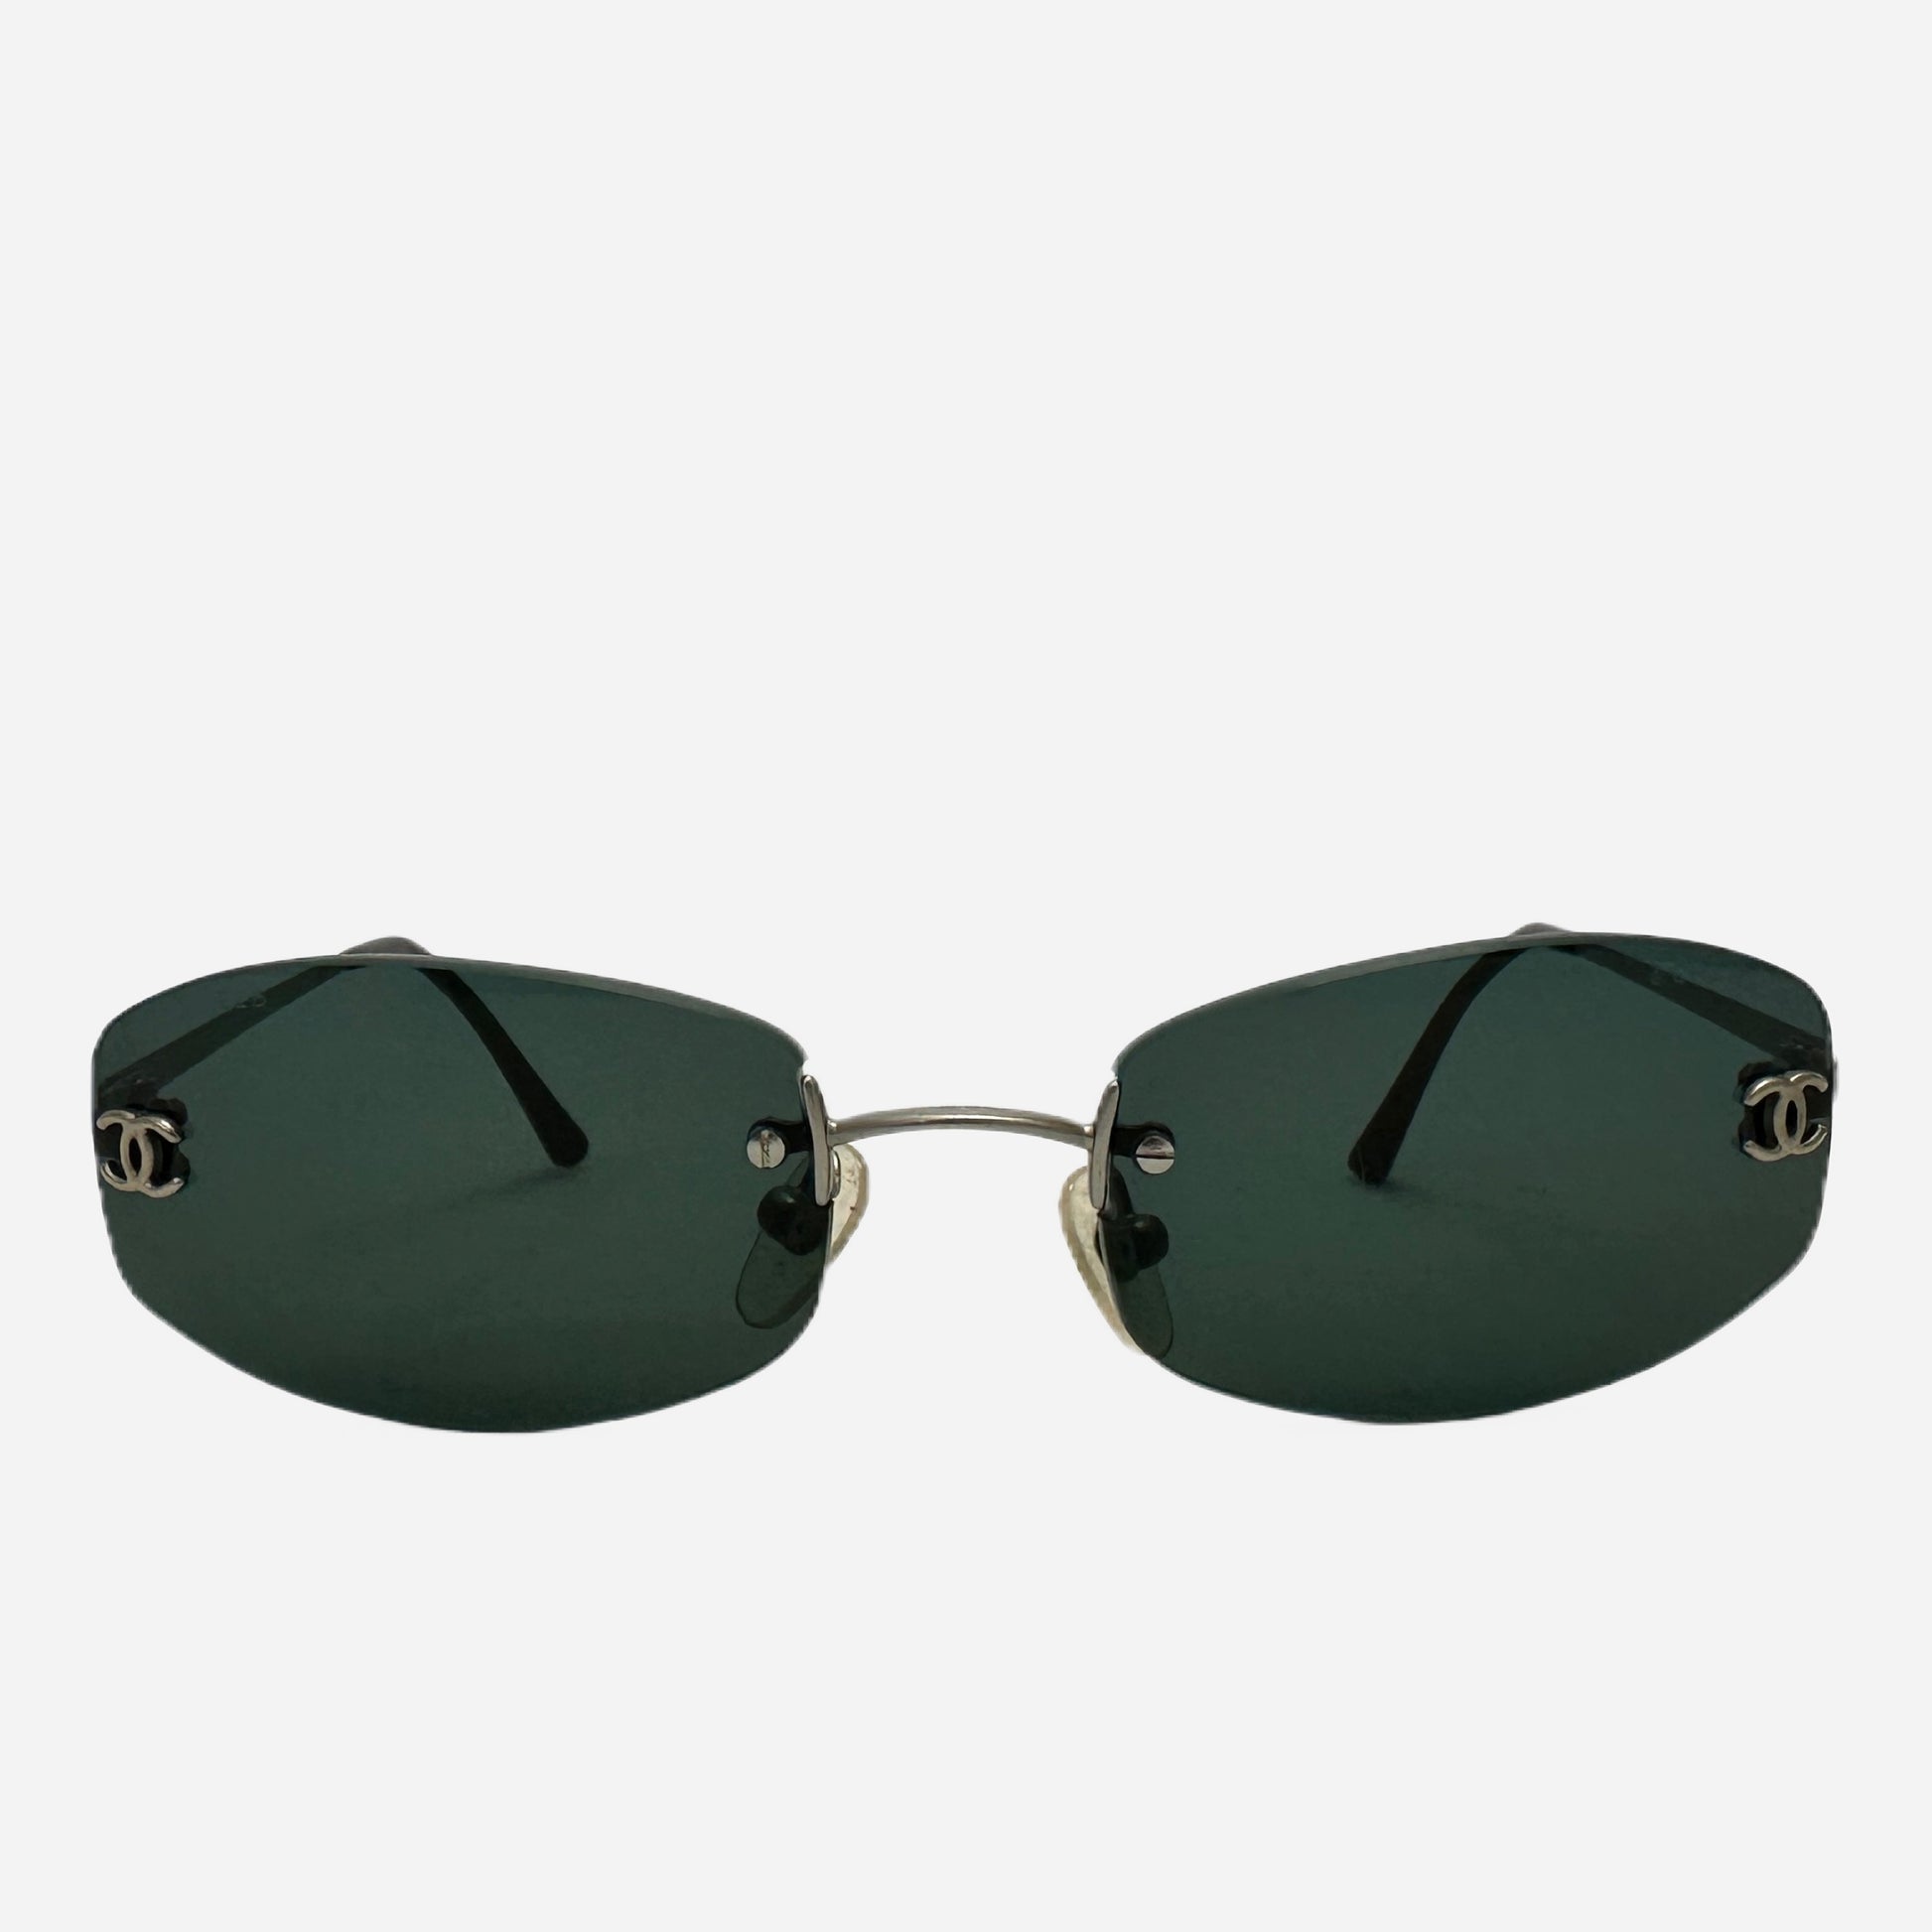 coco chanel and christian dior sunglasses